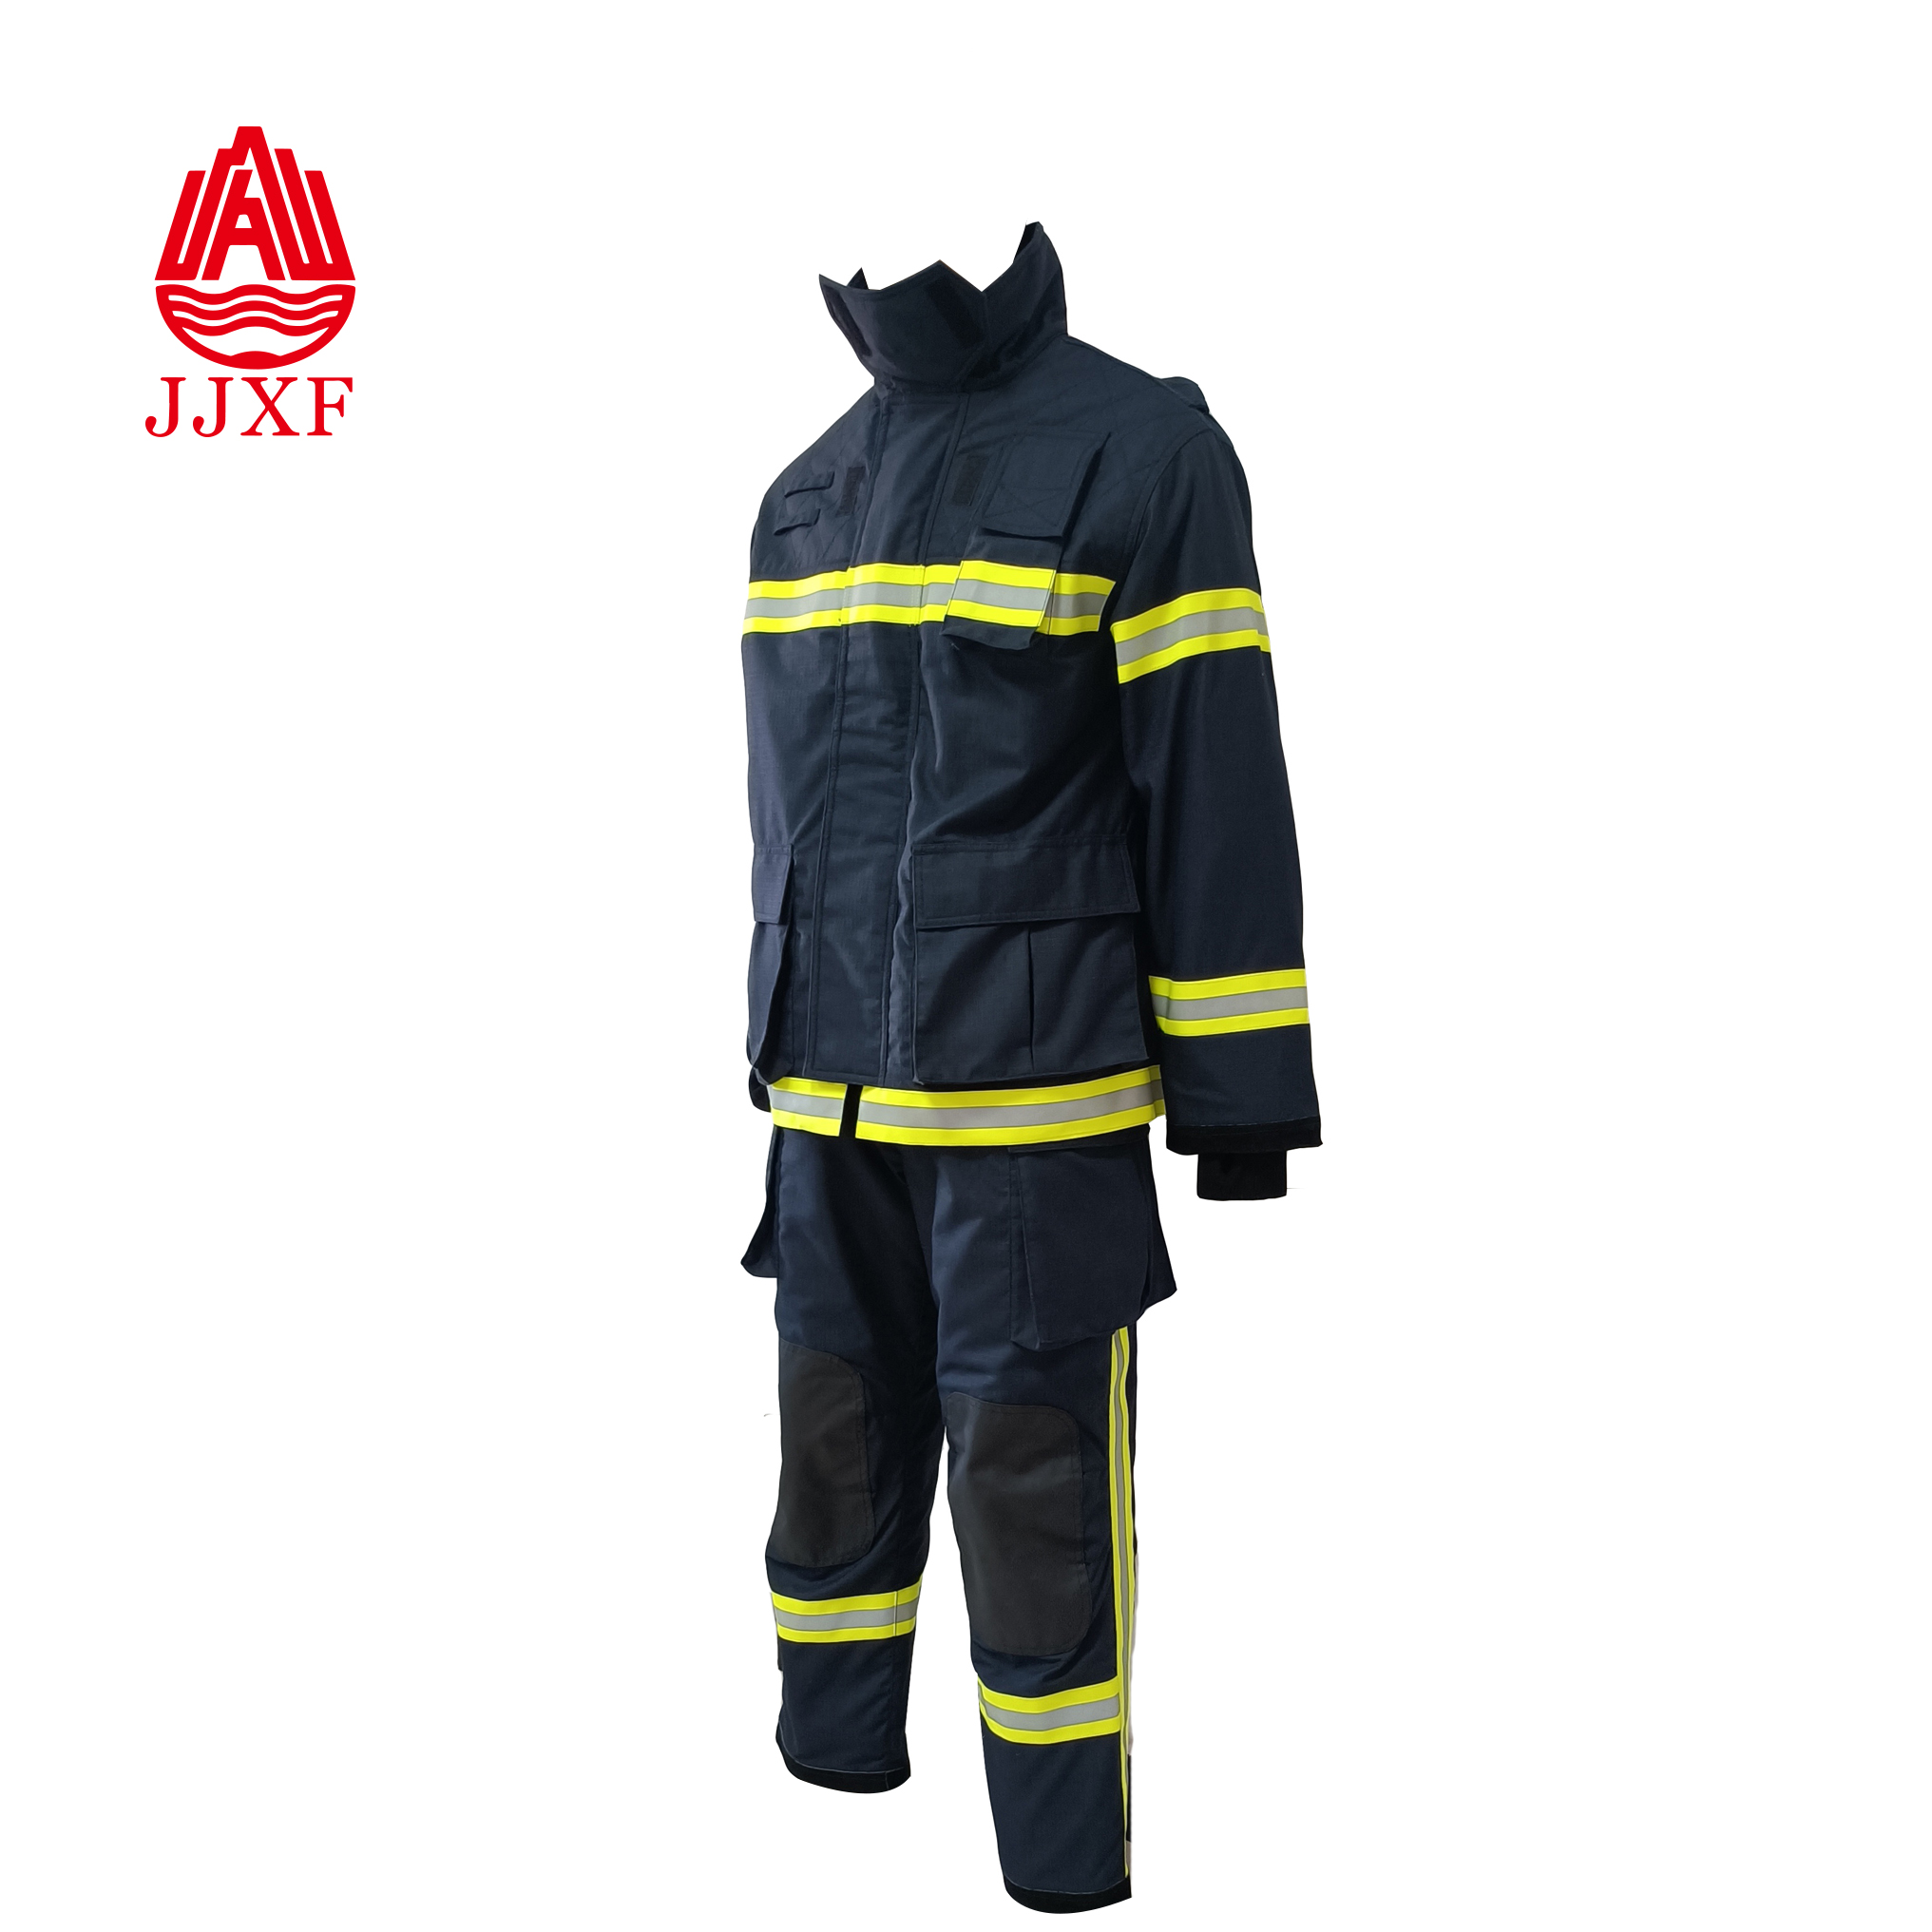  2021 new hot sale permanent antiflaming material firefighter uniform